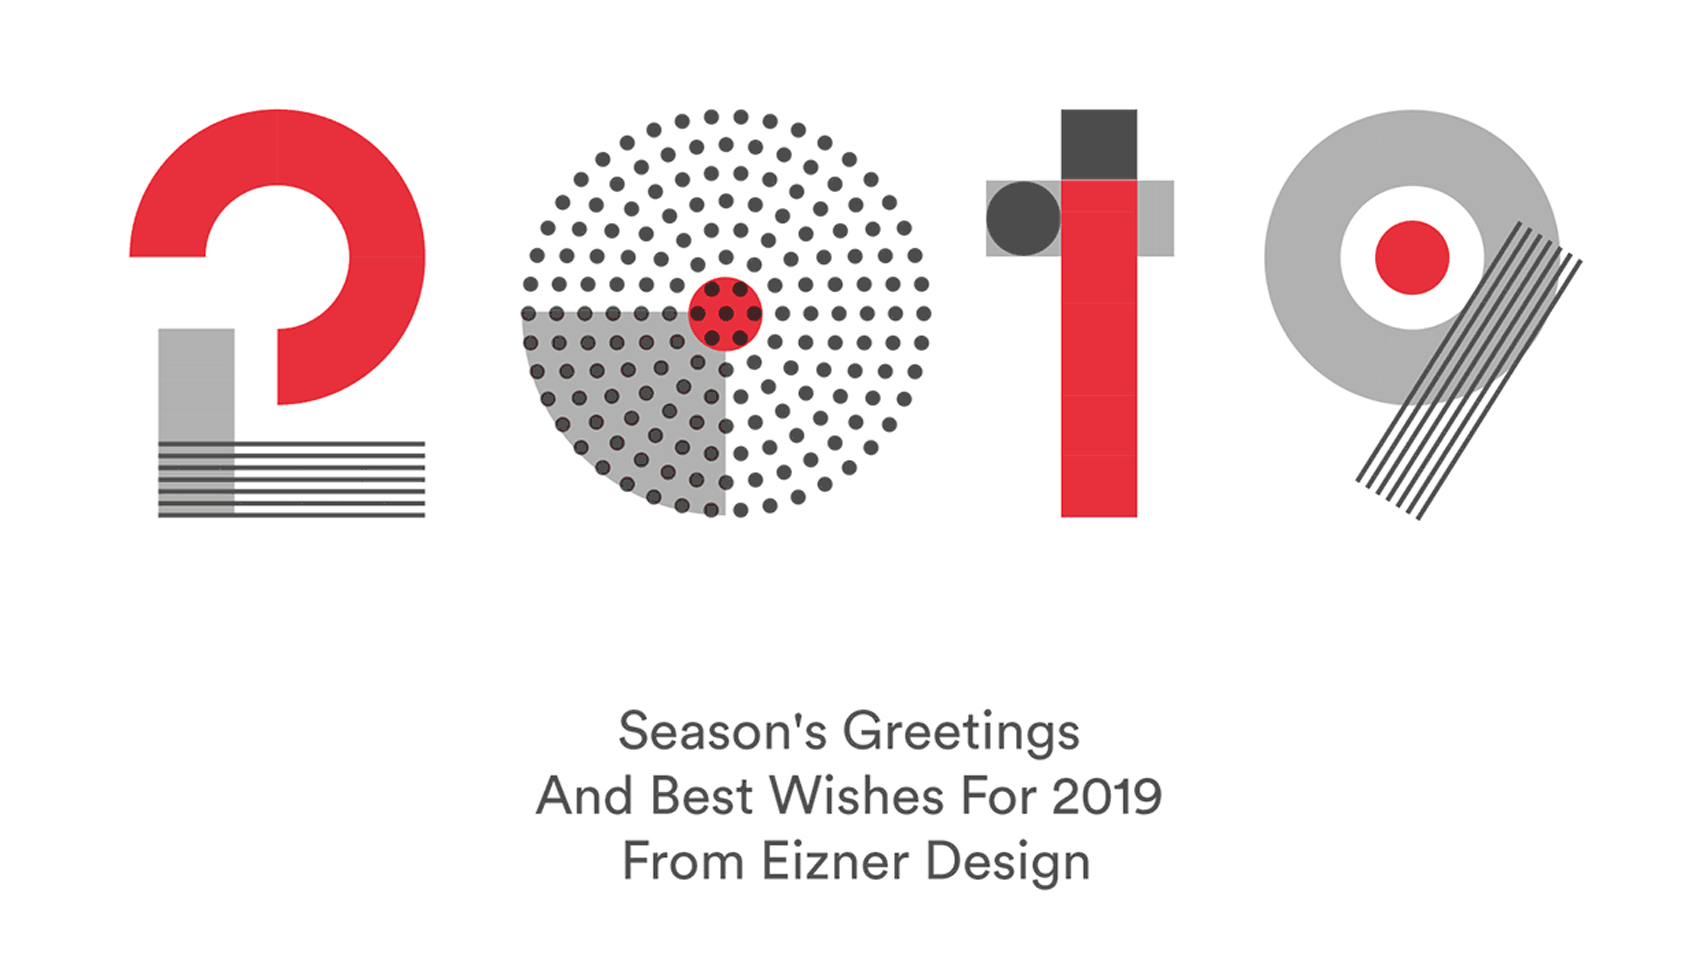 Eizner Design's 2018 Christmas card